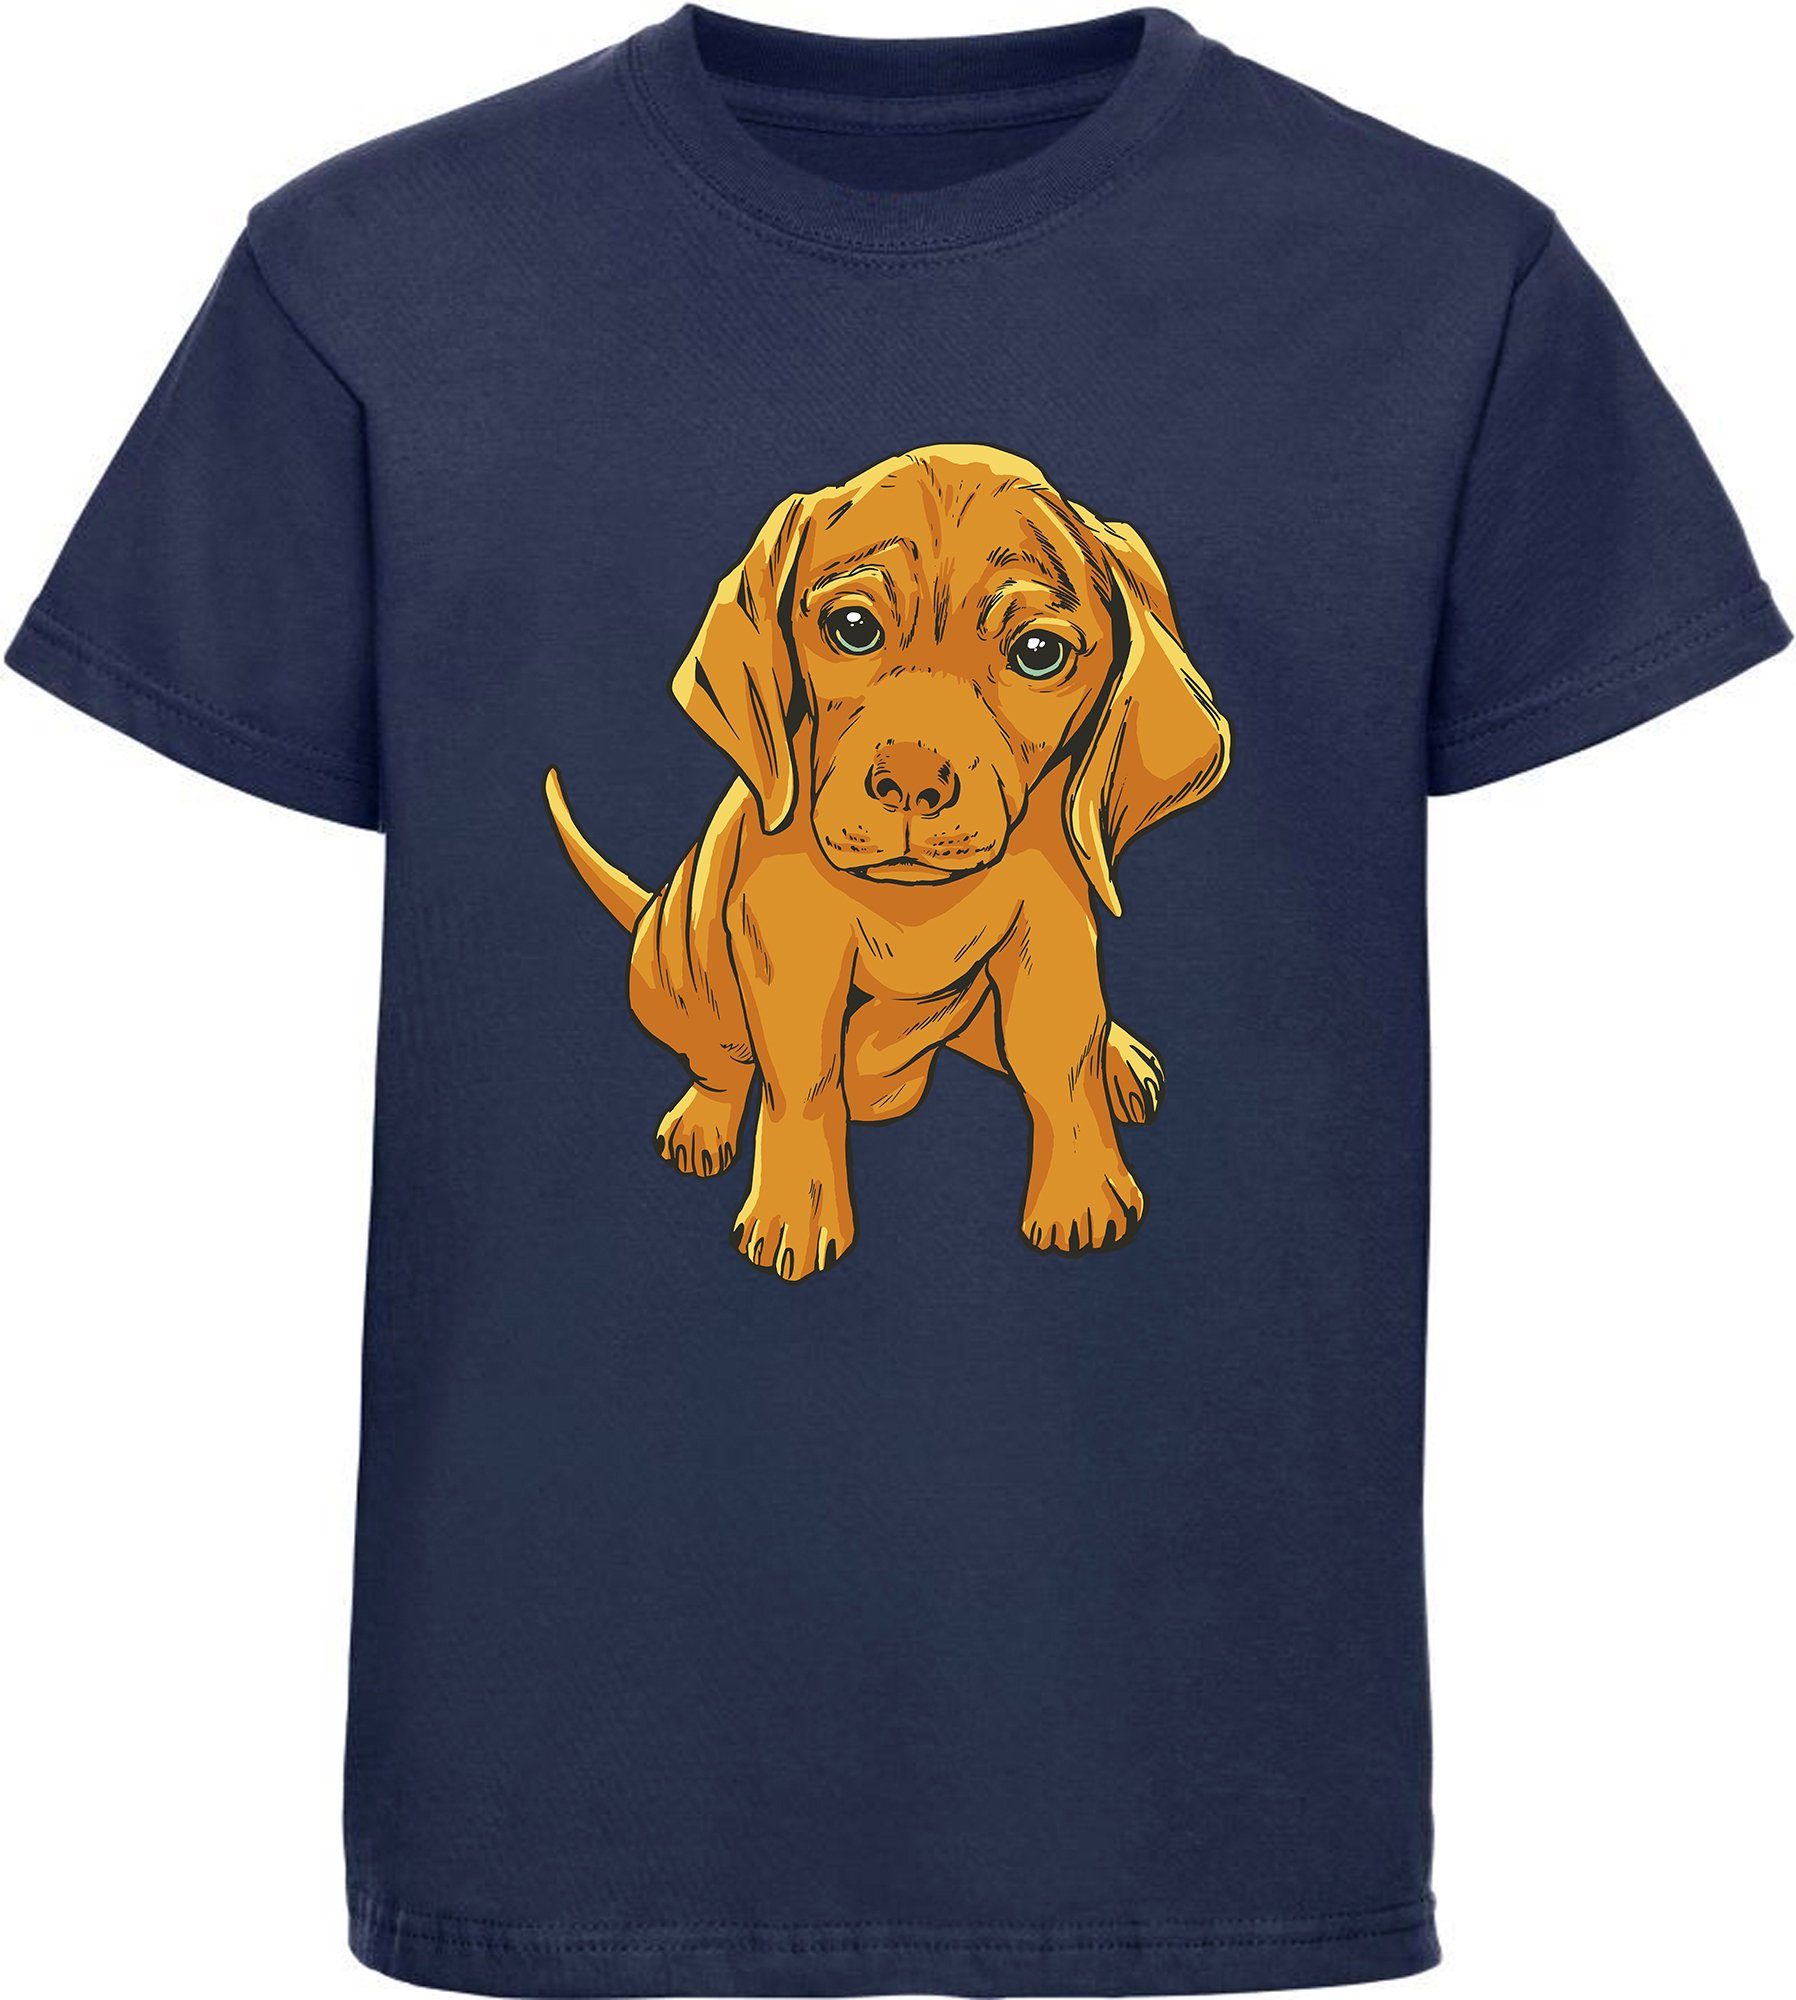 MyDesign24 Print-Shirt Kinder Hunde T-Shirt bedruckt - Süßer Welpe Baumwollshirt mit Aufdruck, i230 navy blau